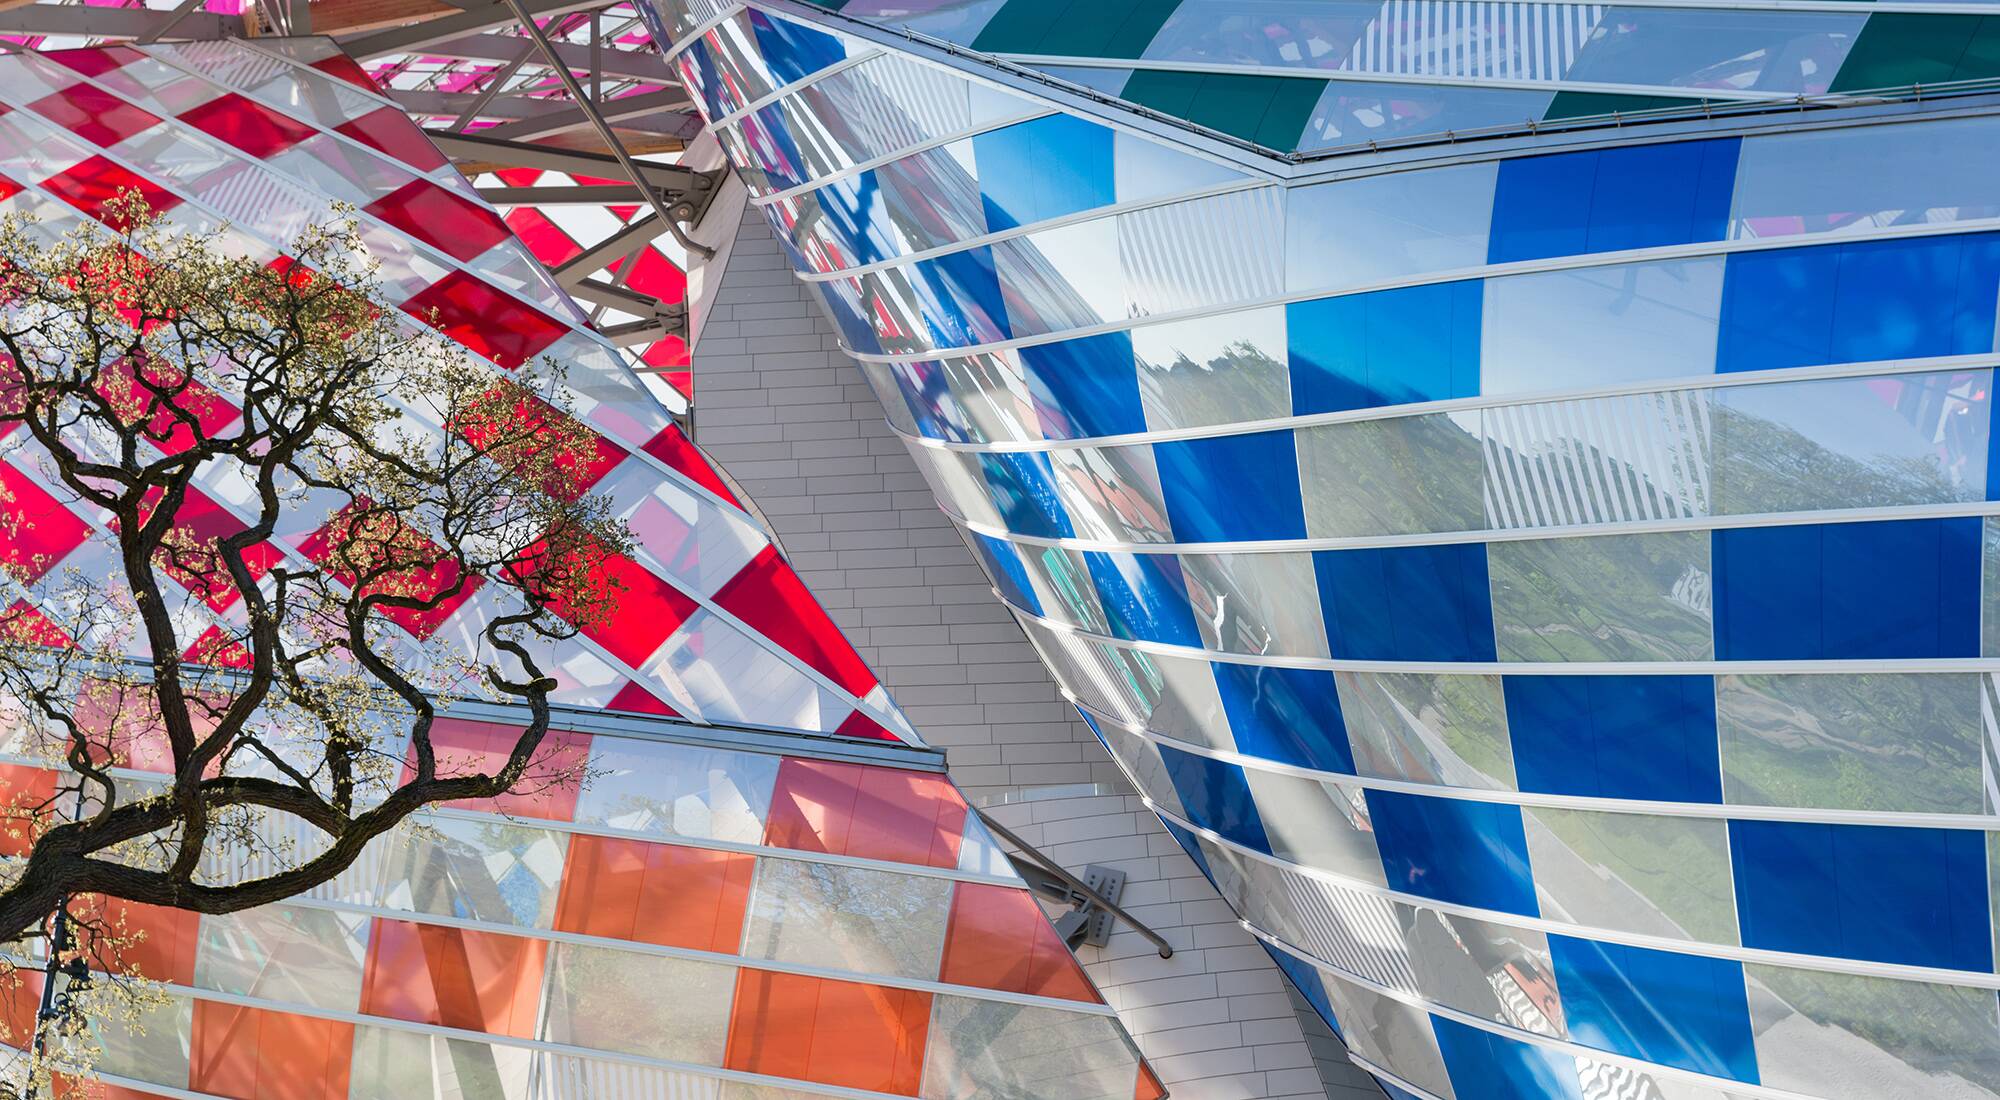 A closer look at Daniel Buren's colorful intervention at the Fondation Louis  Vuitton